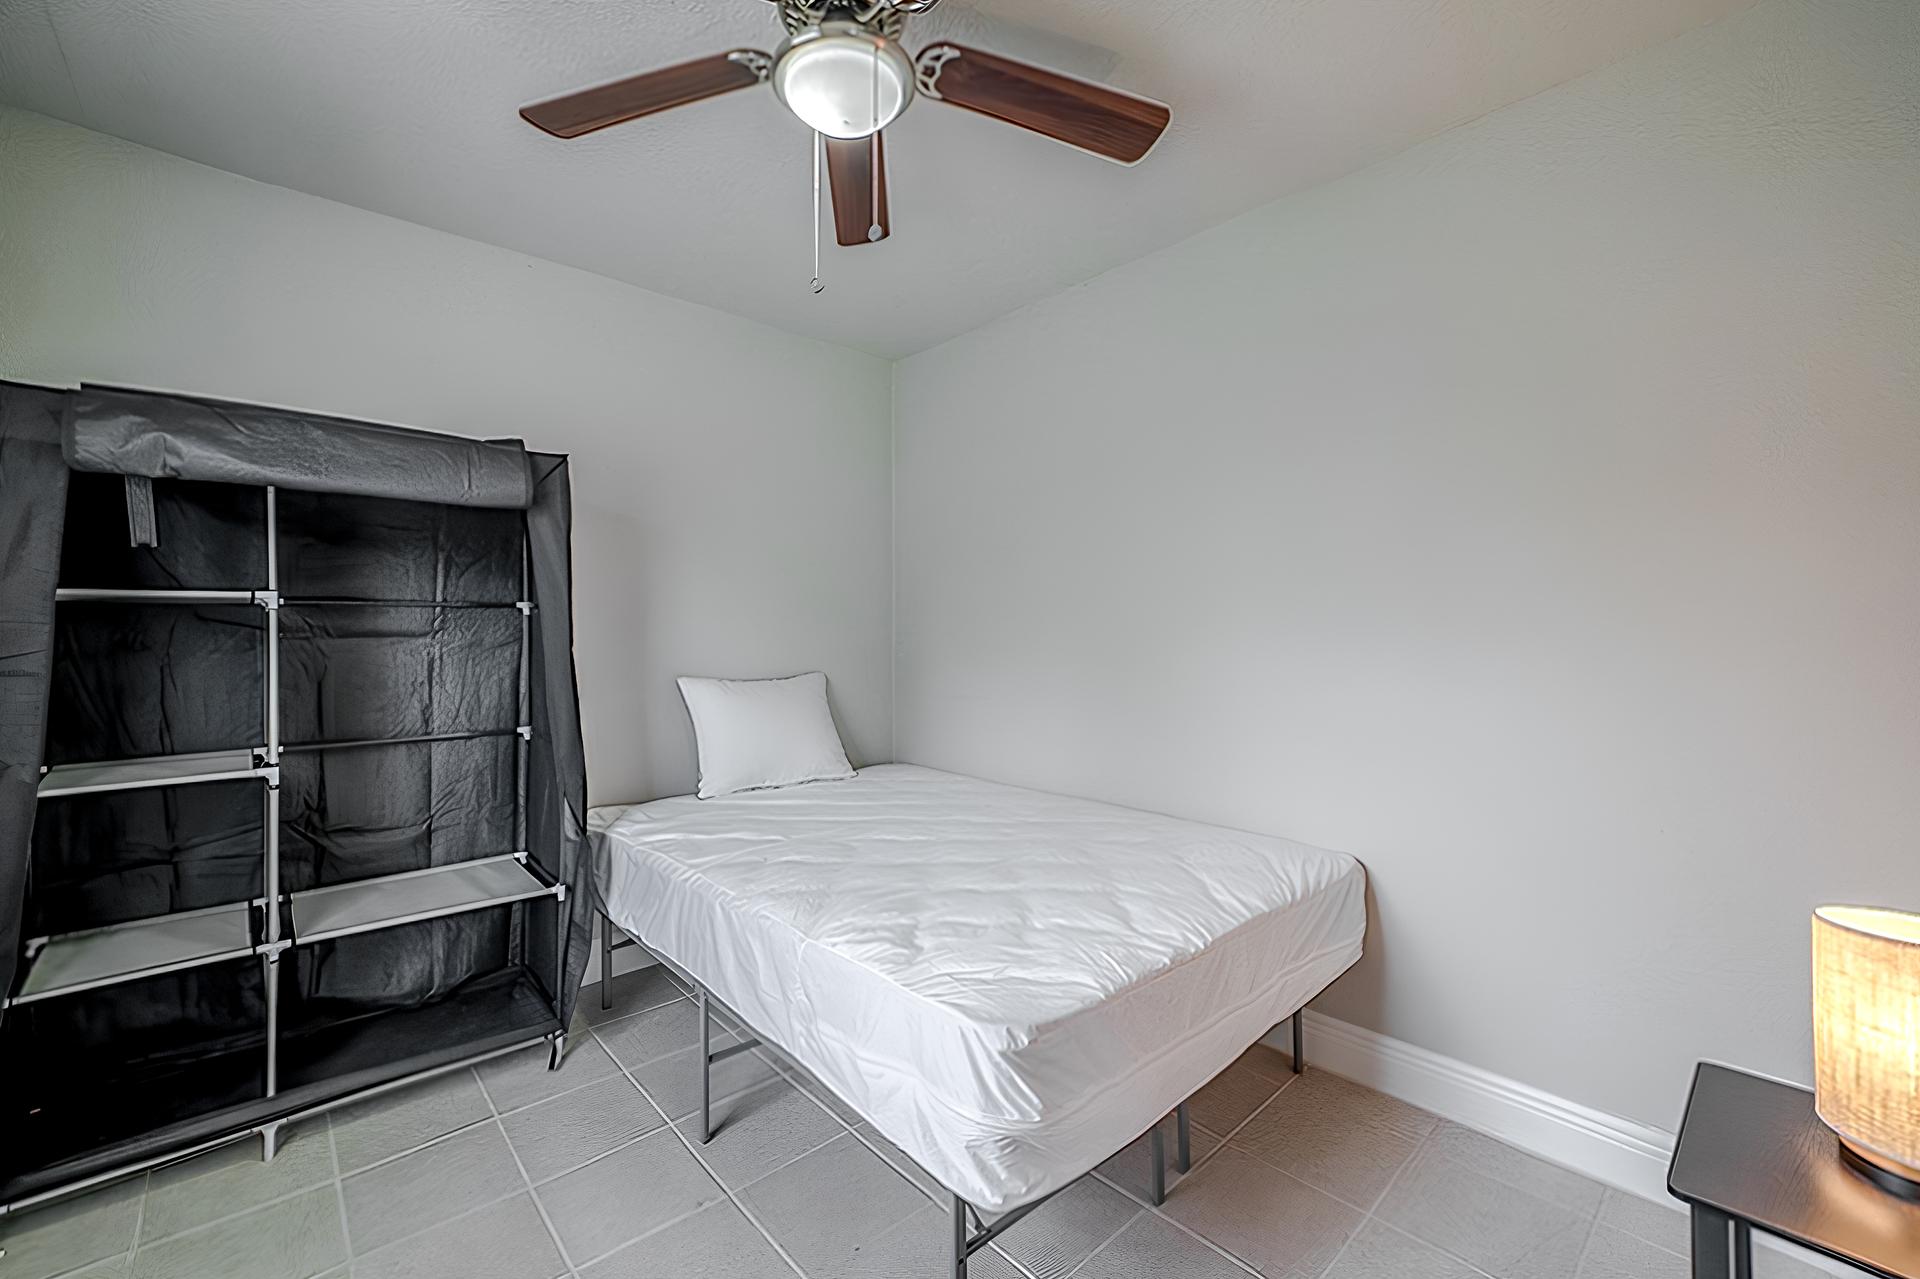 bedroom, detected: ceiling fan, hardwood, window blind, bed